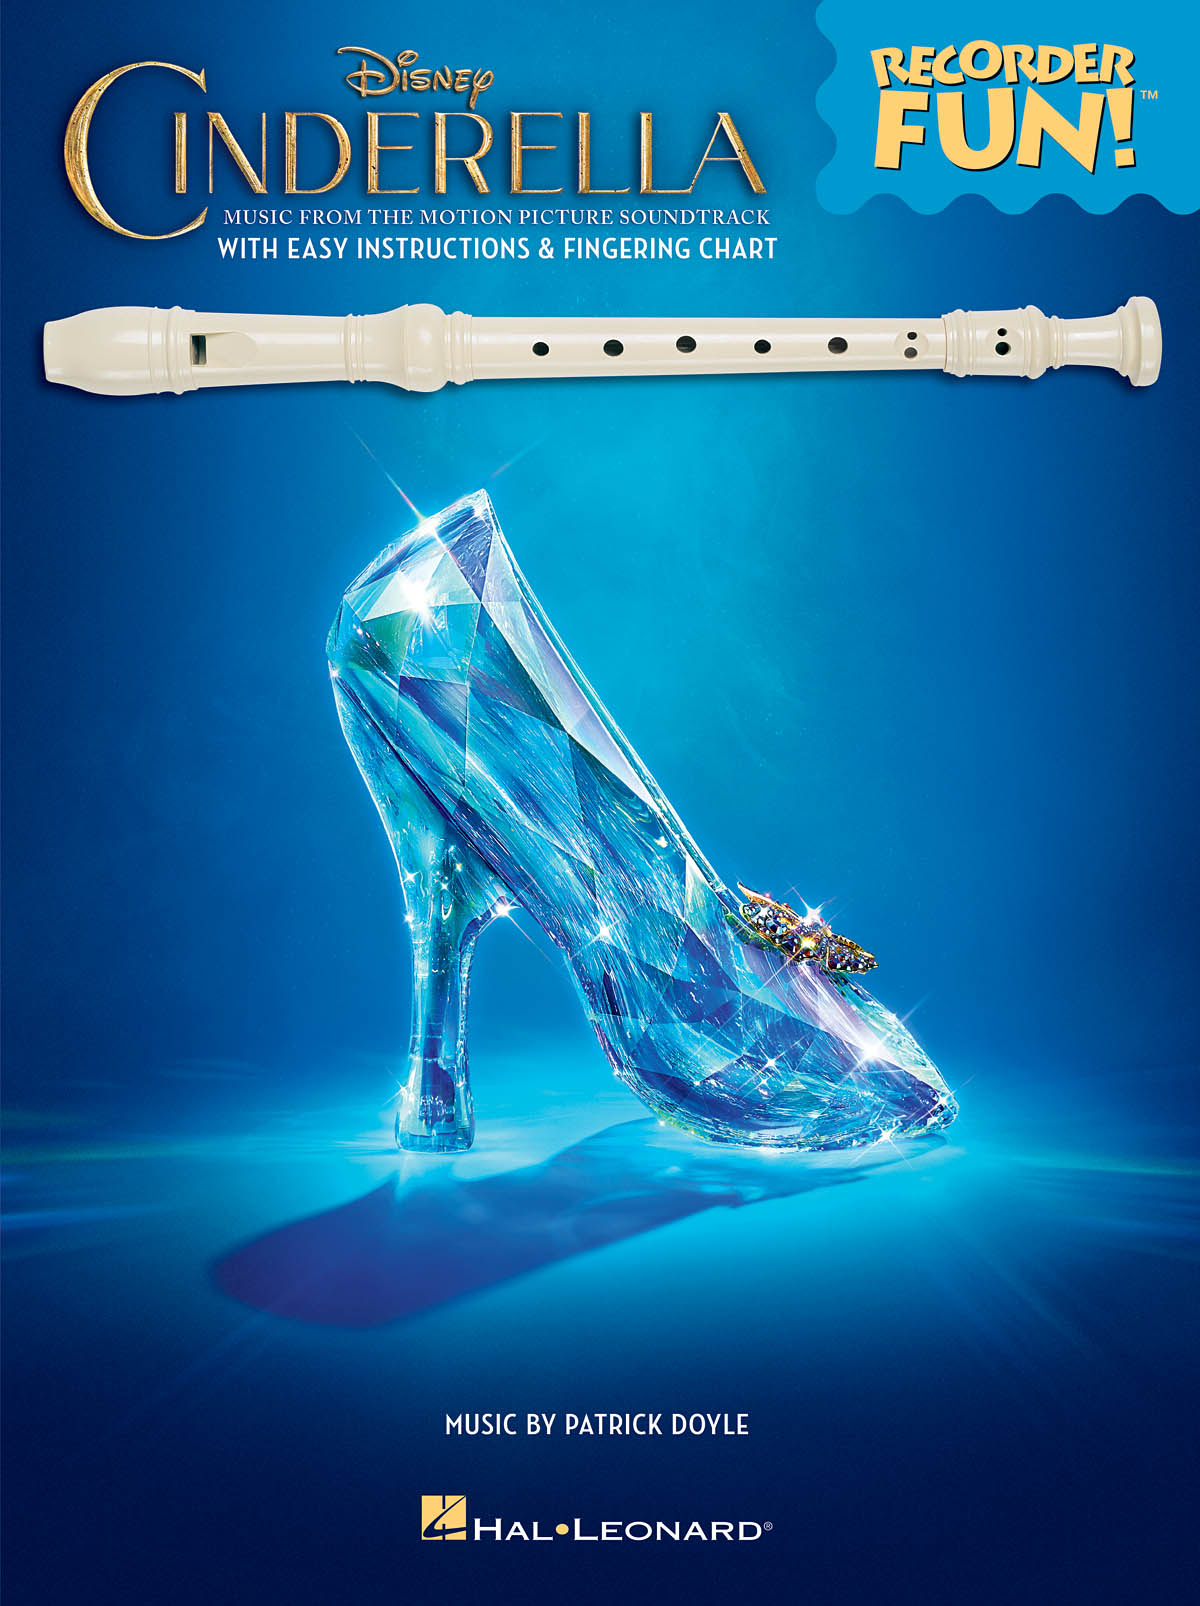 Cinderella - Recorder Fun!(TM) - Music from the Disney Motion Picture Soundtrack - noty pro zobcovou flétnu